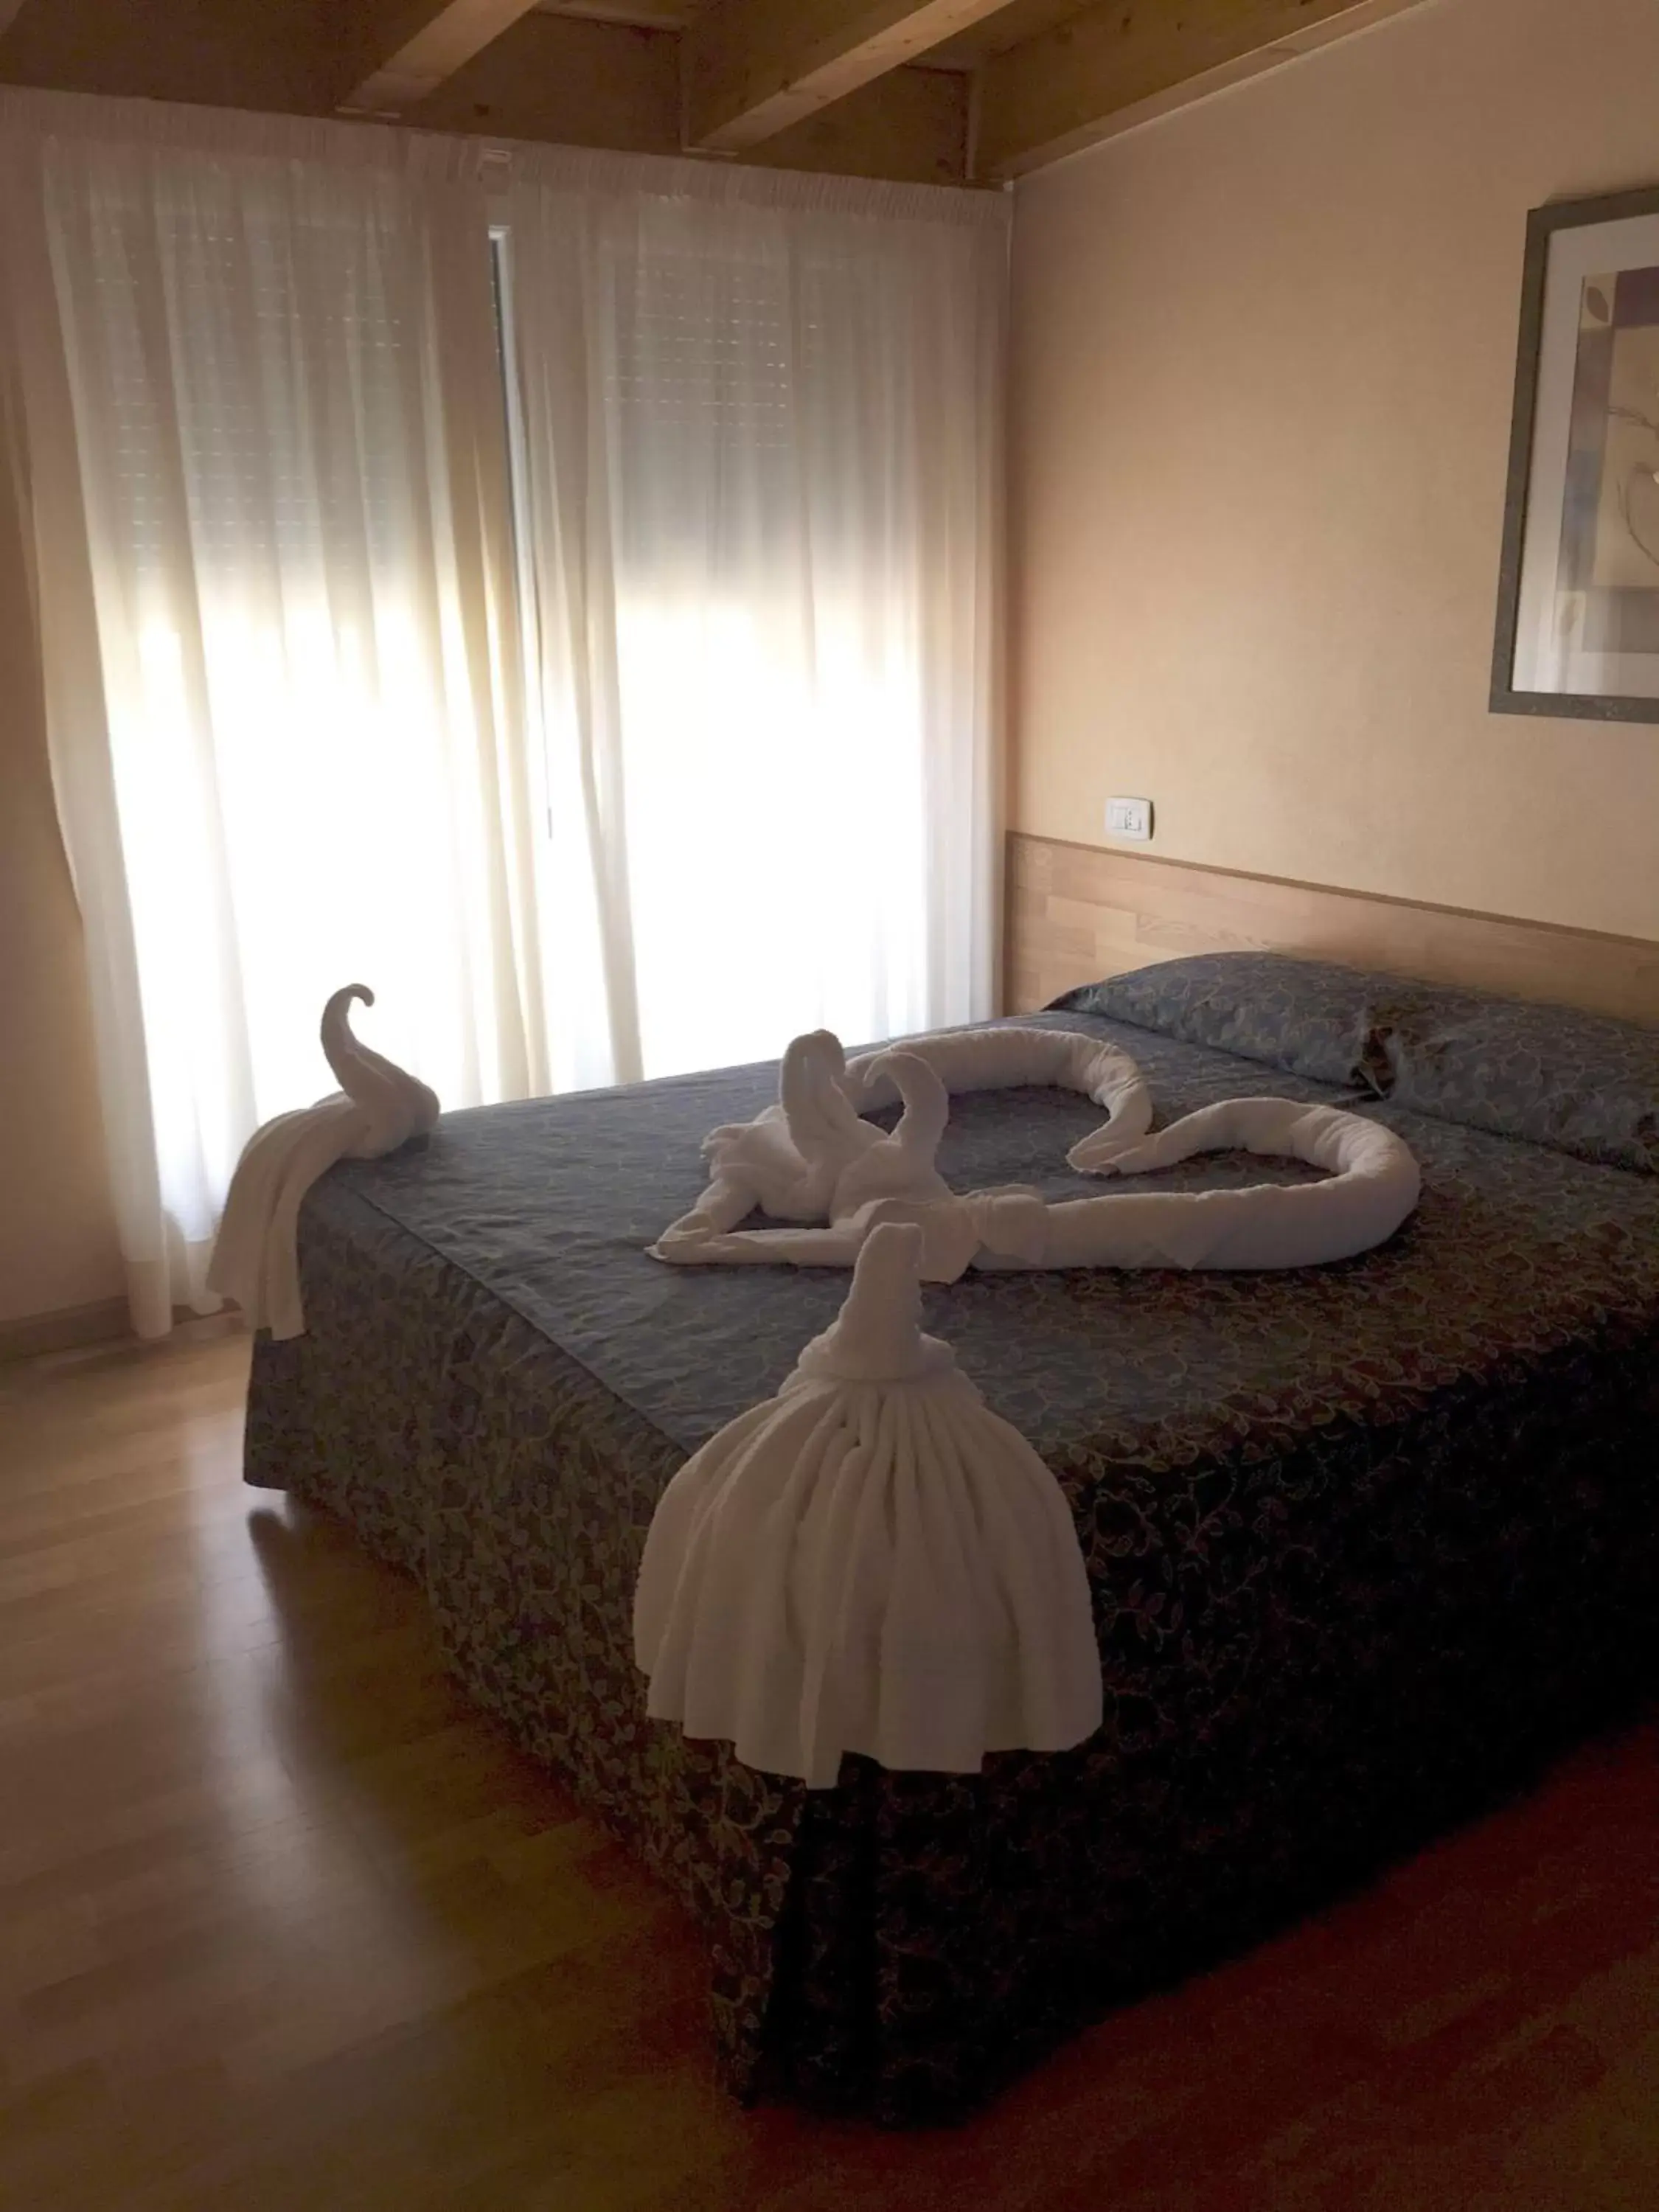 Decorative detail, Bed in Hotel Concordia